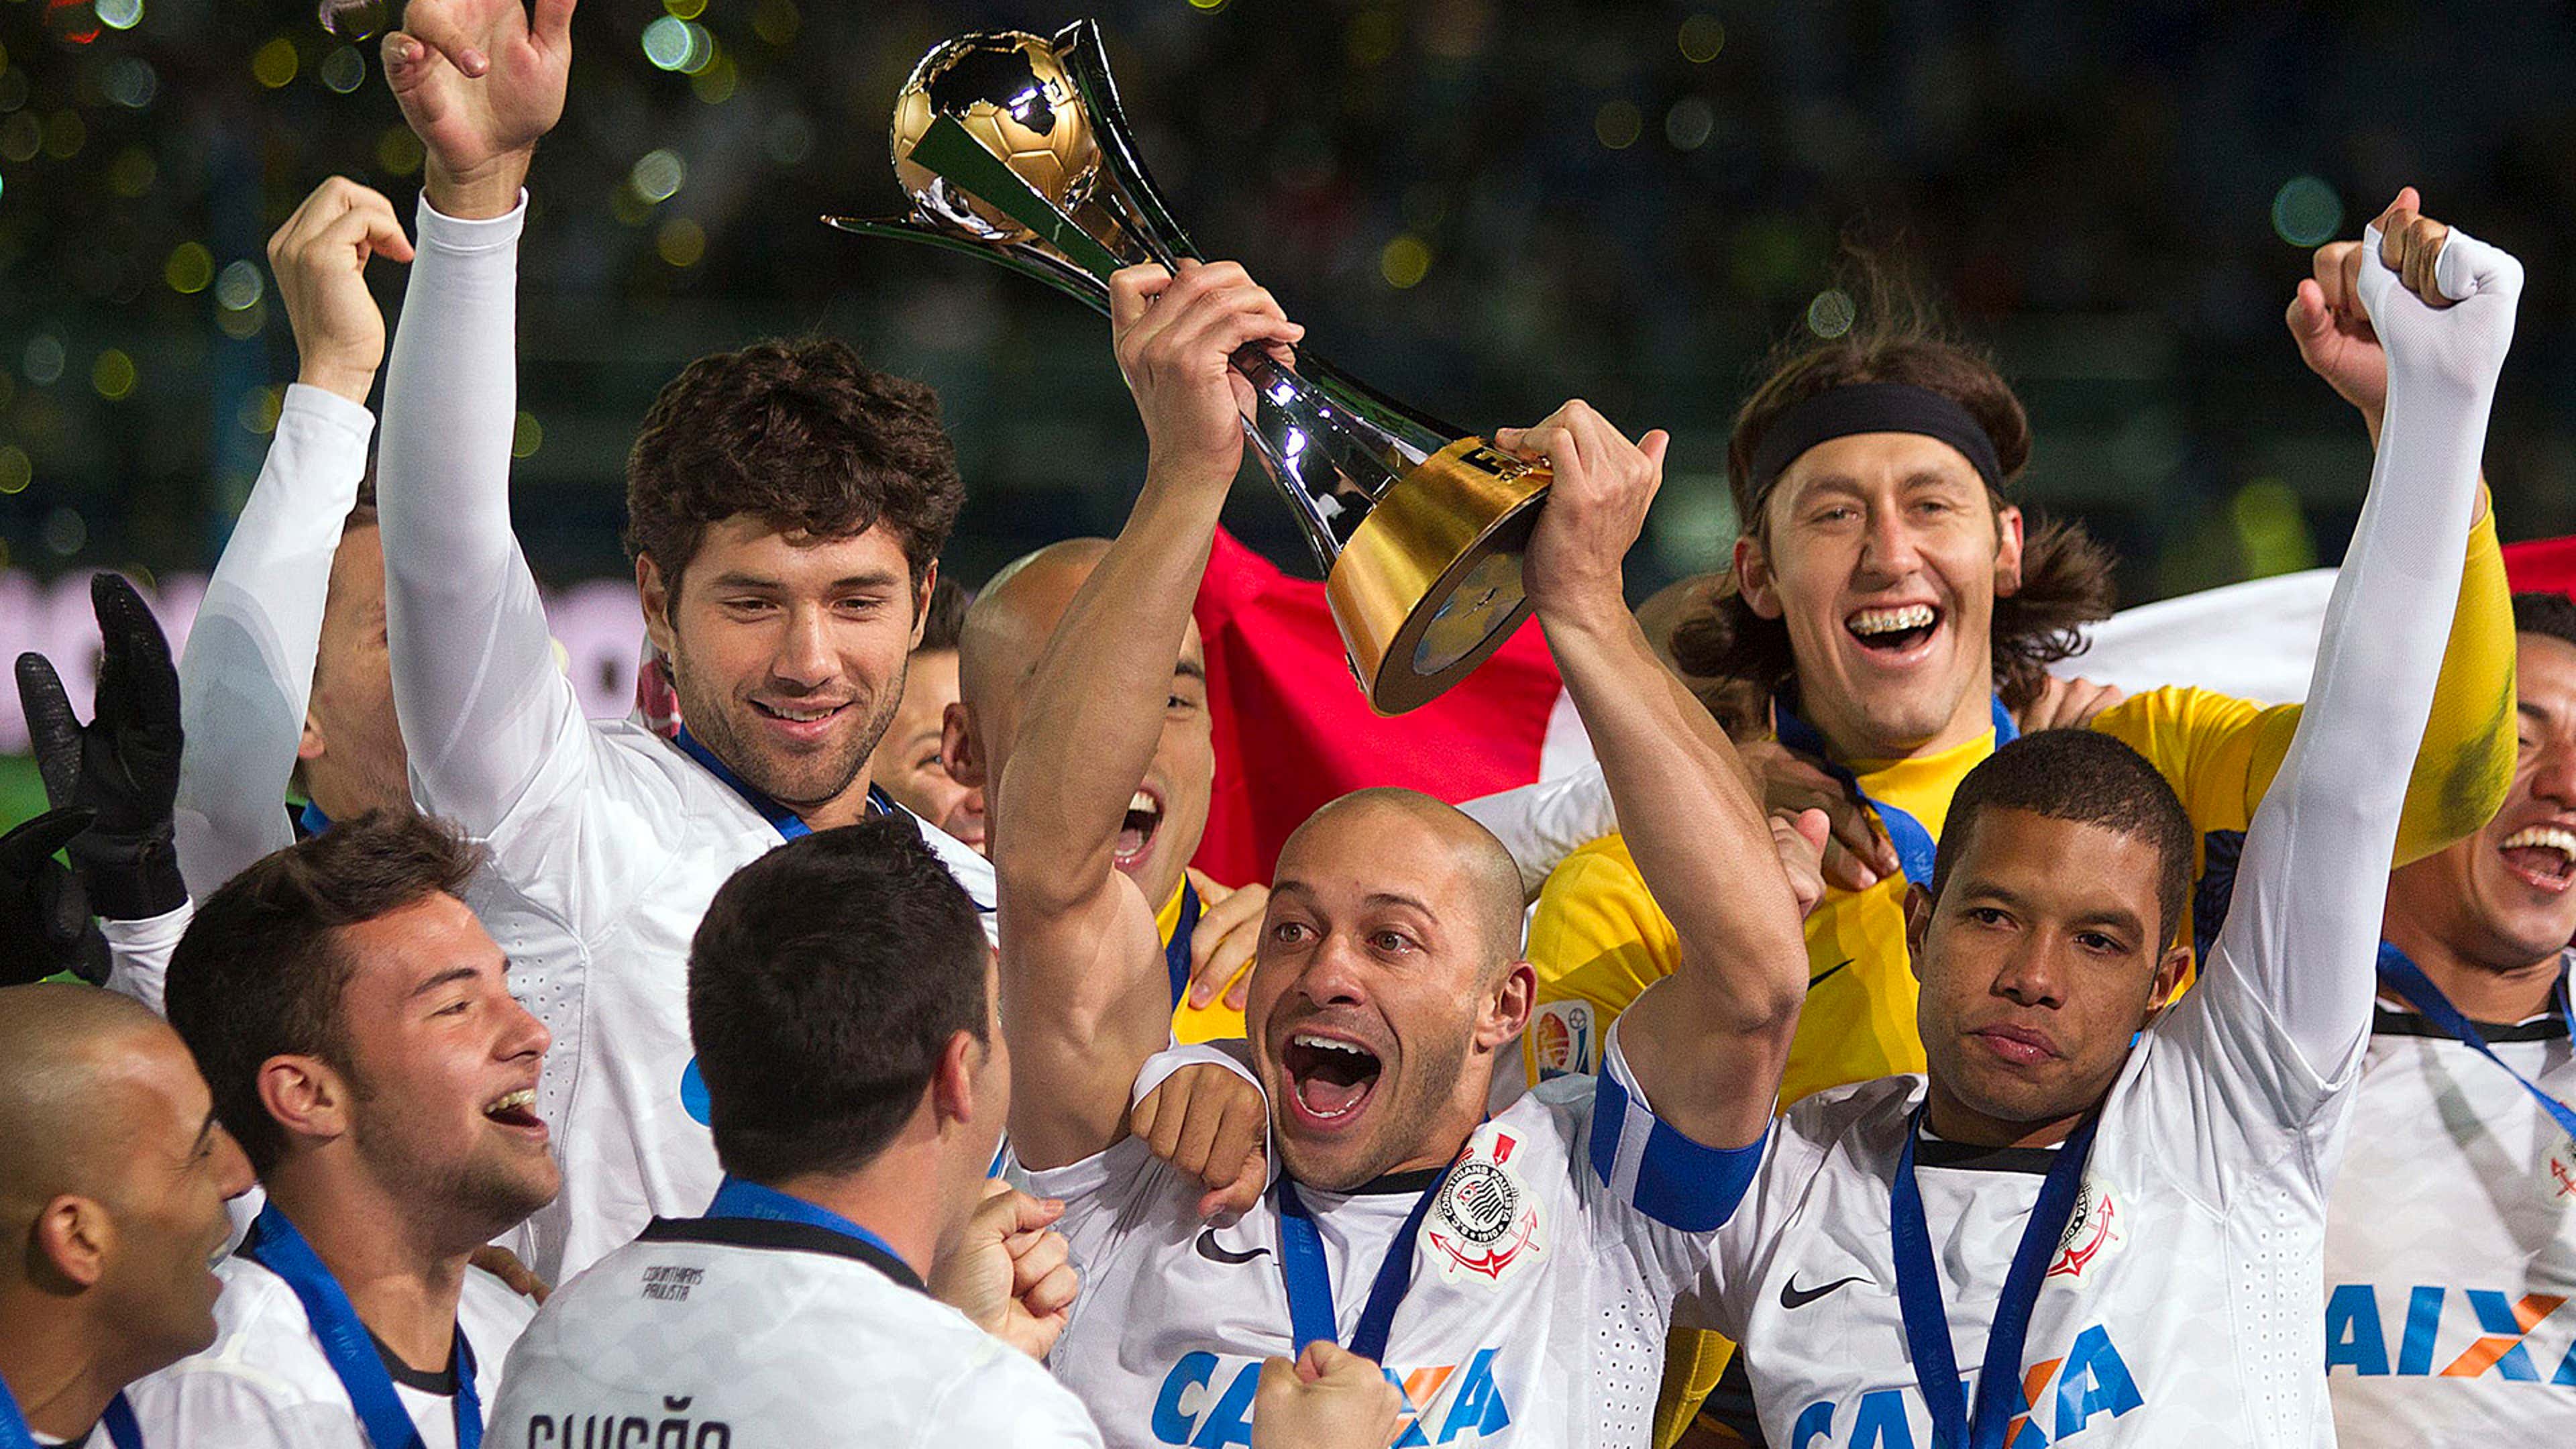 Alessandro Cassio Corinthians Chelsea 2012 Club World Cup 16122012